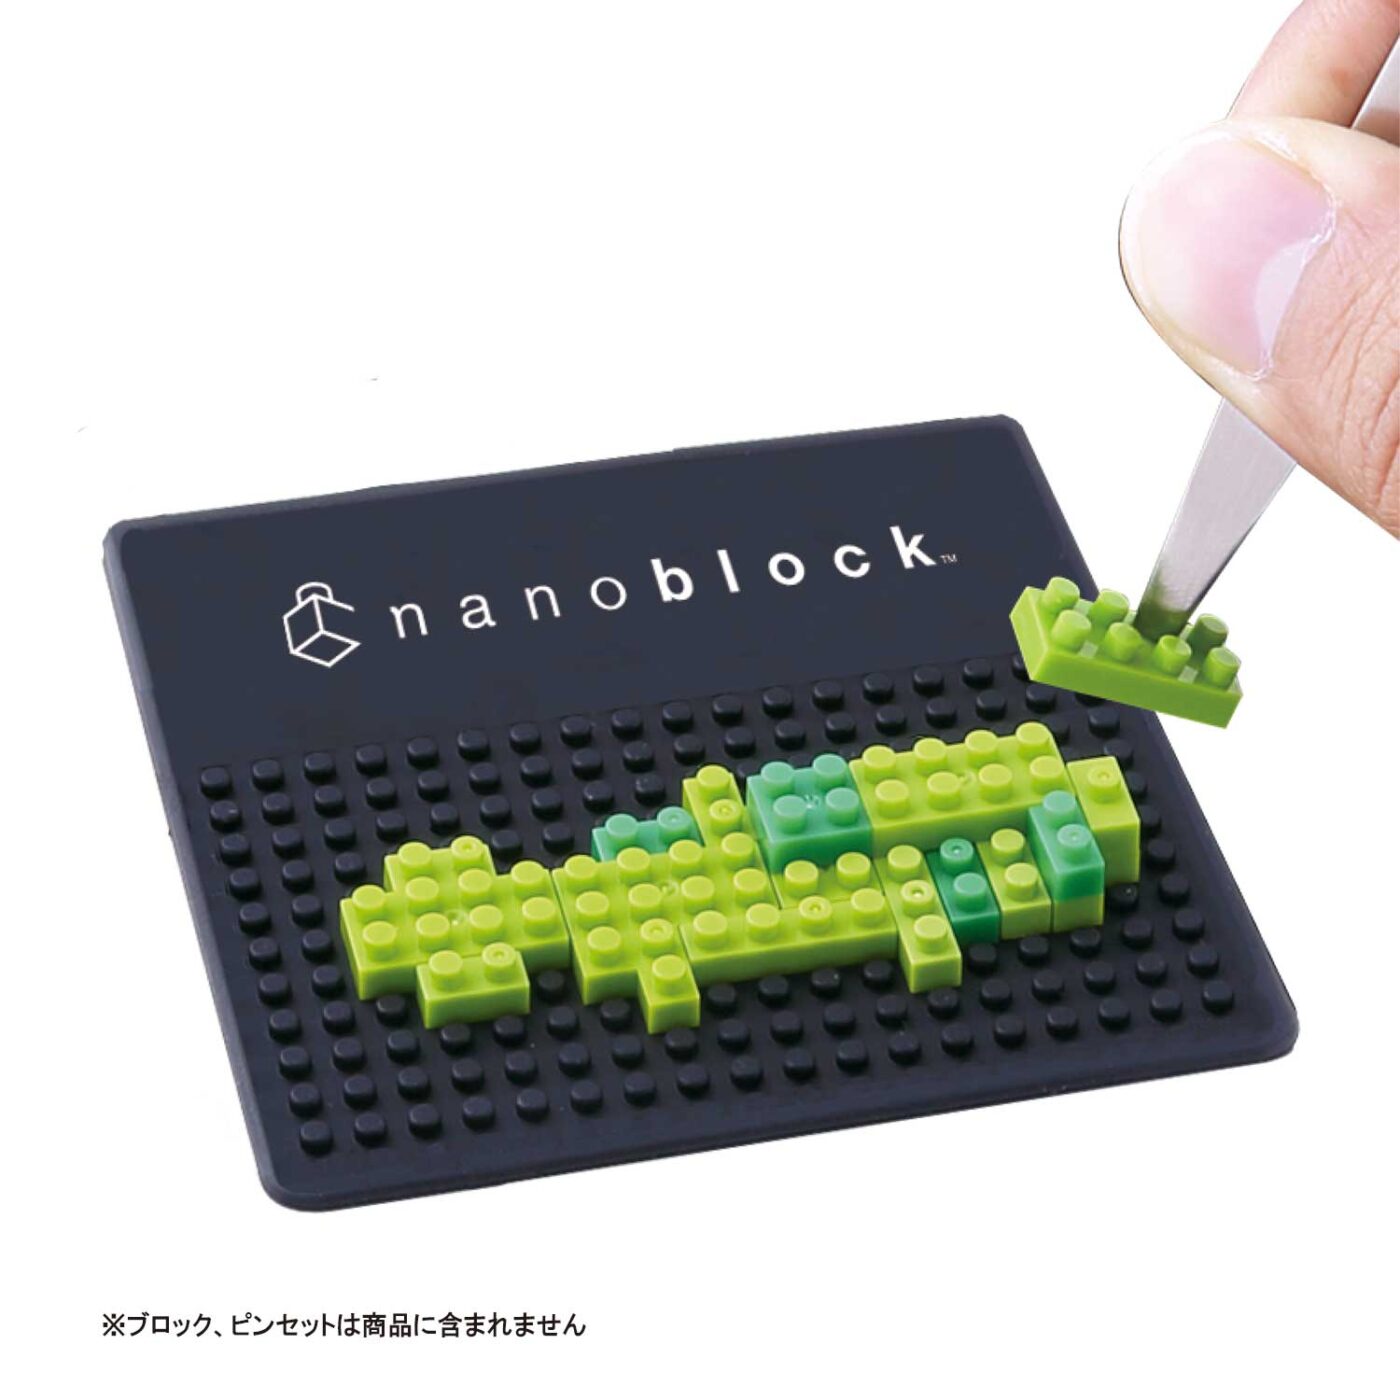 Product image of nanoblock® PAD mini